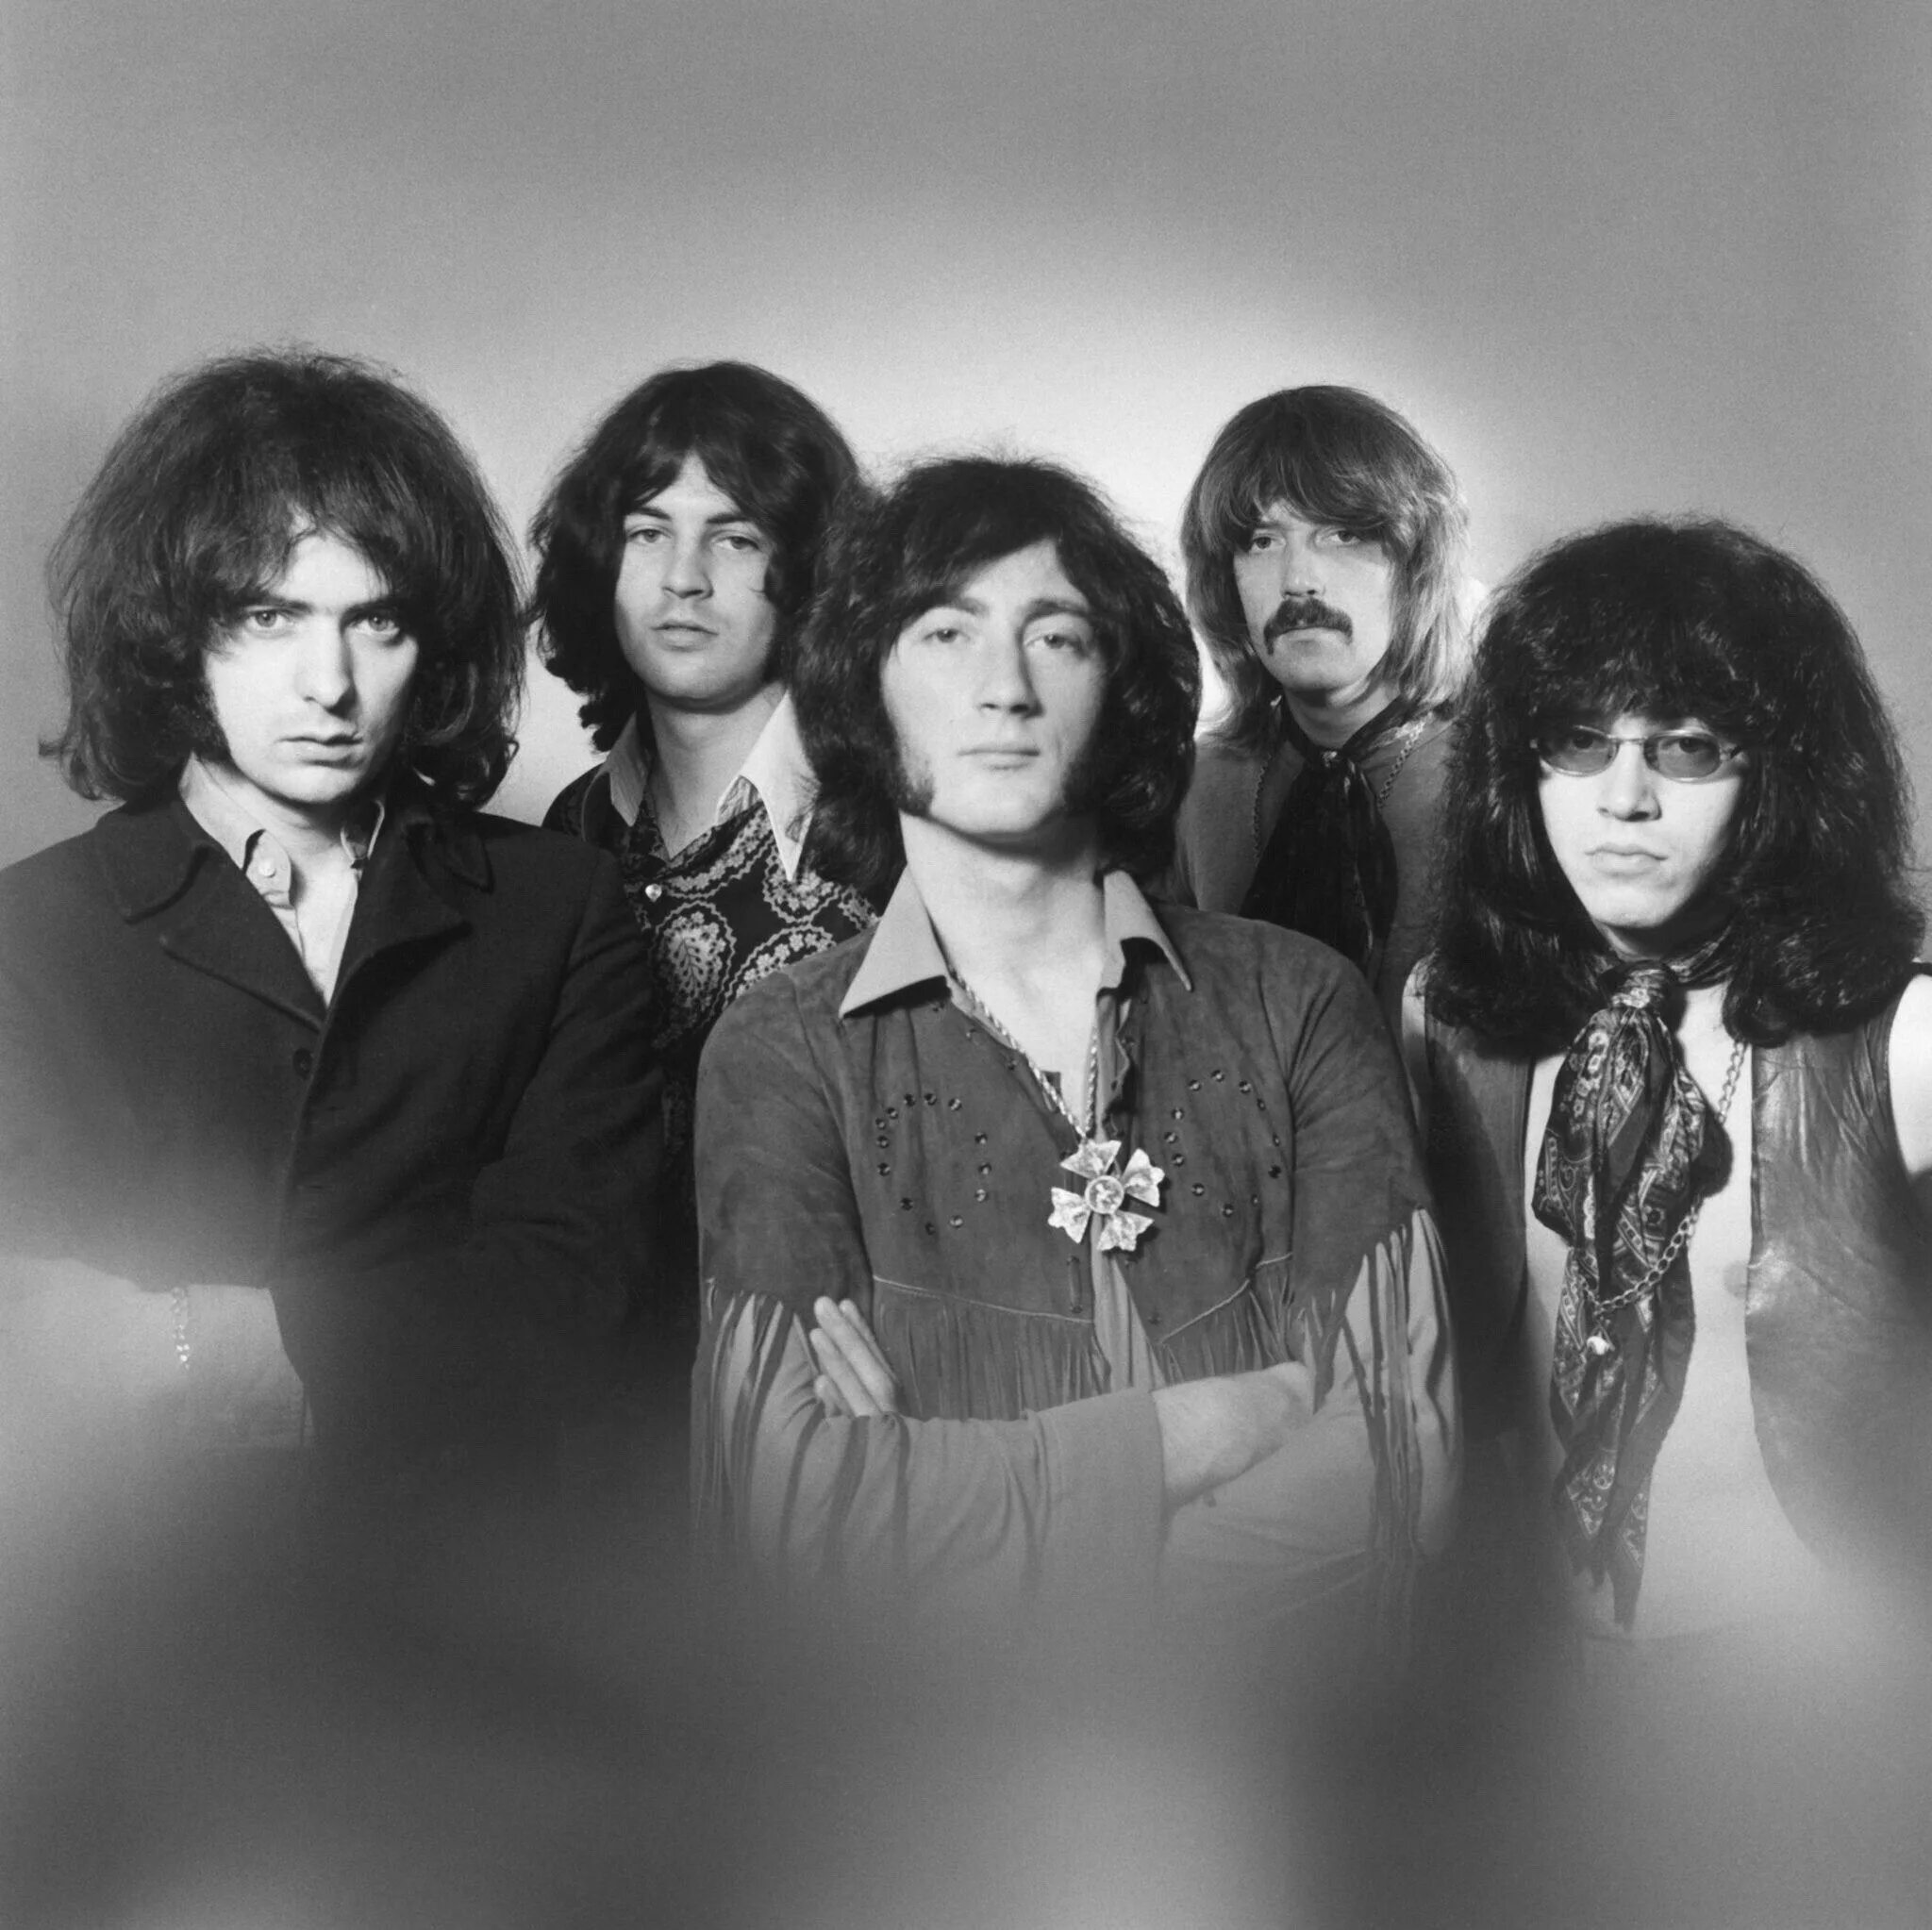 Ди перпл. Группа дип перпл. Группа Deep Purple 1969. Группа Deep Purple 1972. Группа дип перпл 1970.